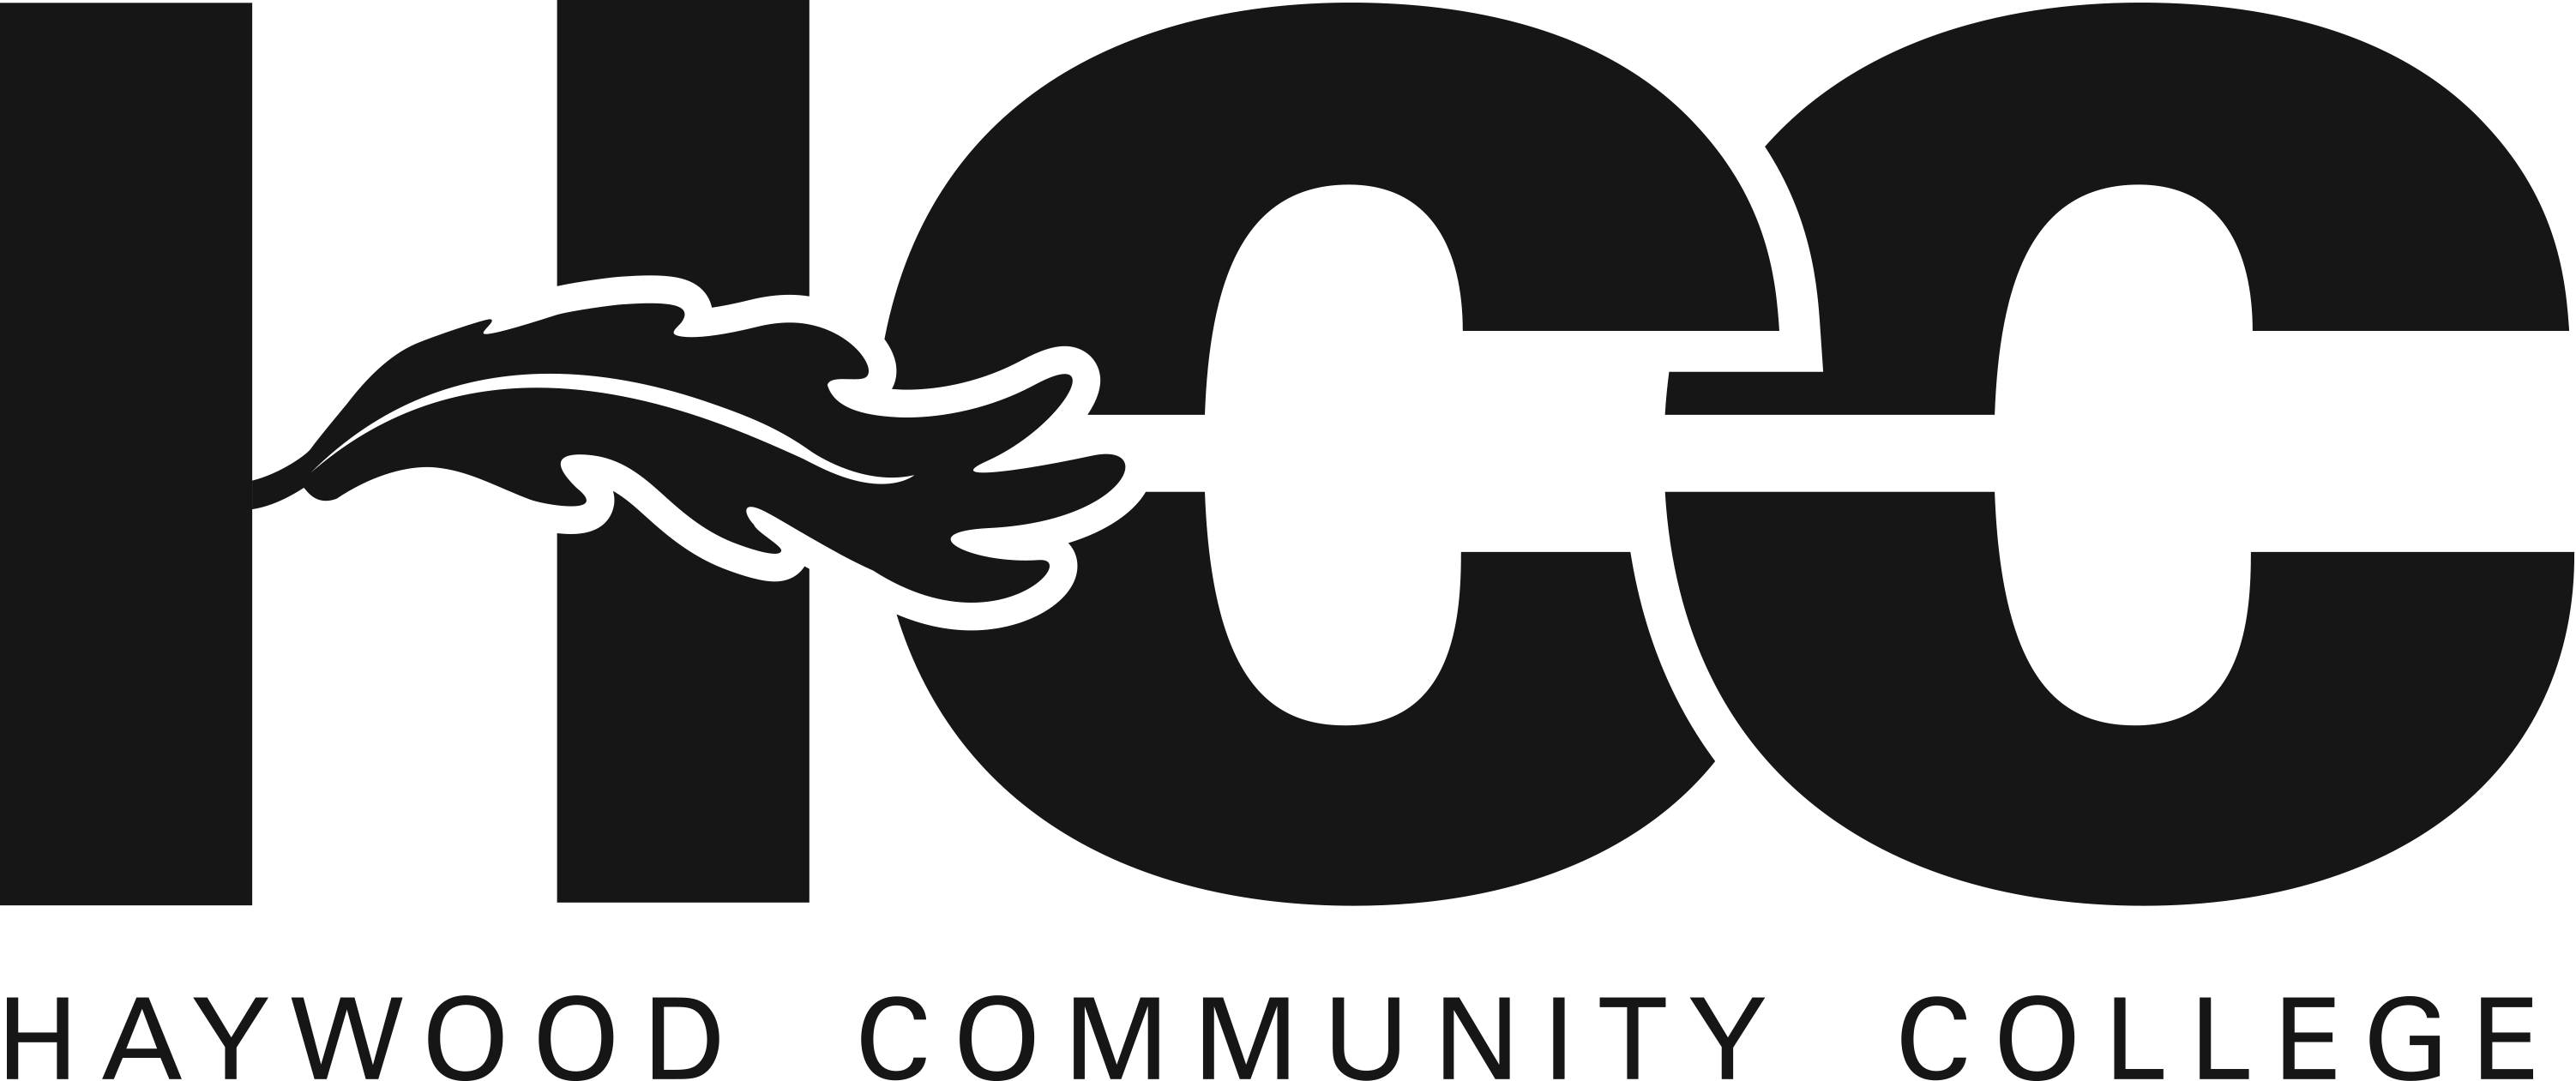 HCC Logo - Logos and Templates | Haywood Community College